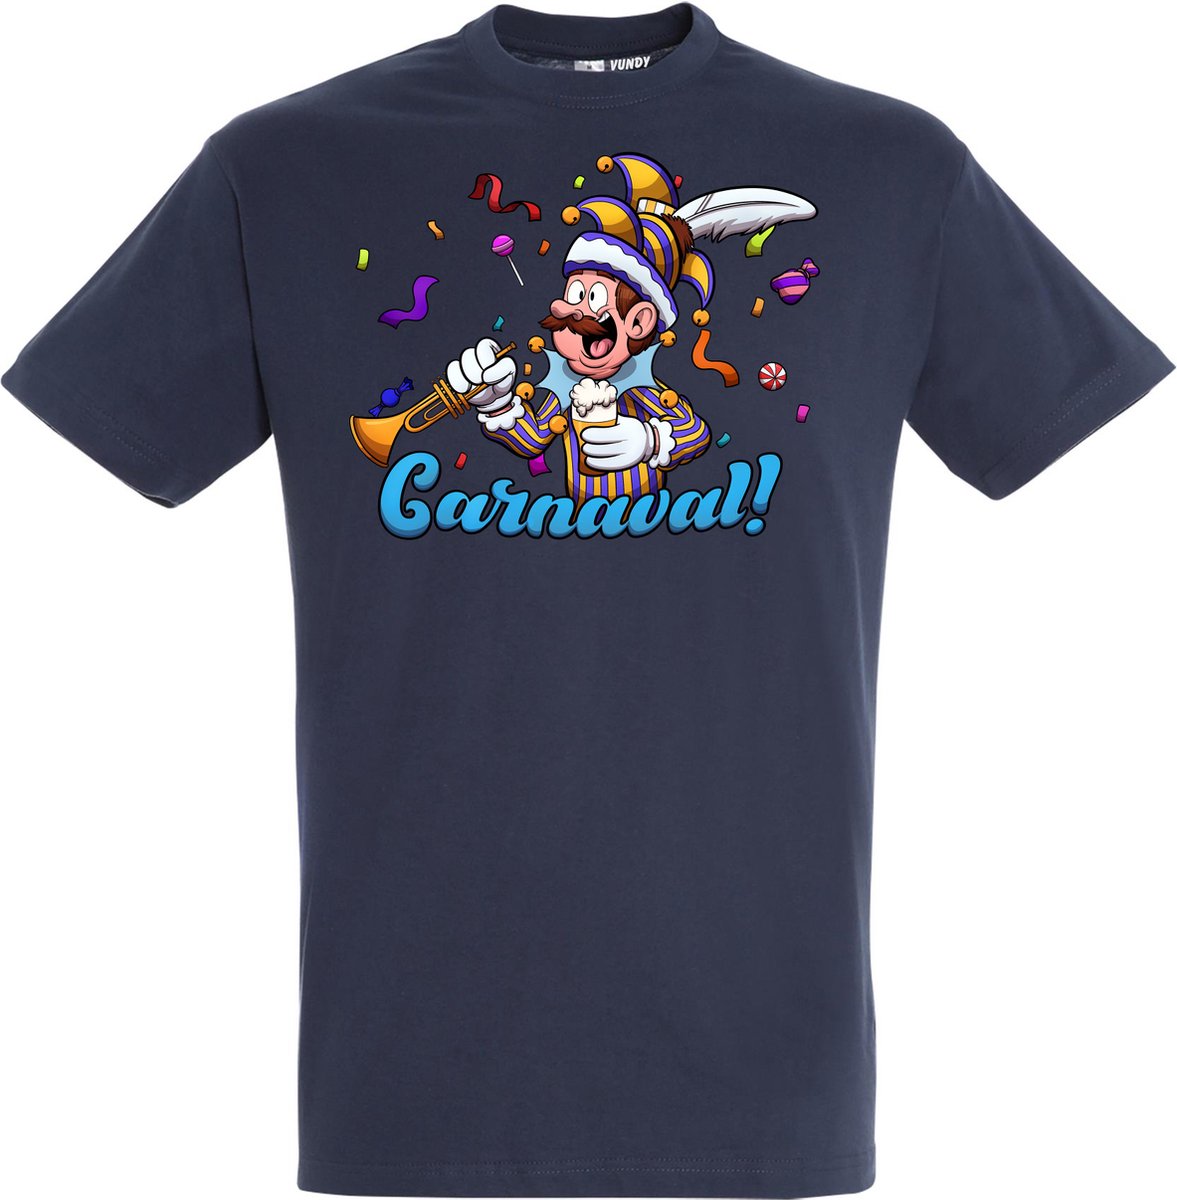 T-shirt Carnavalluh | Carnaval | Carnavalskleding Dames Heren | Navy | maat L